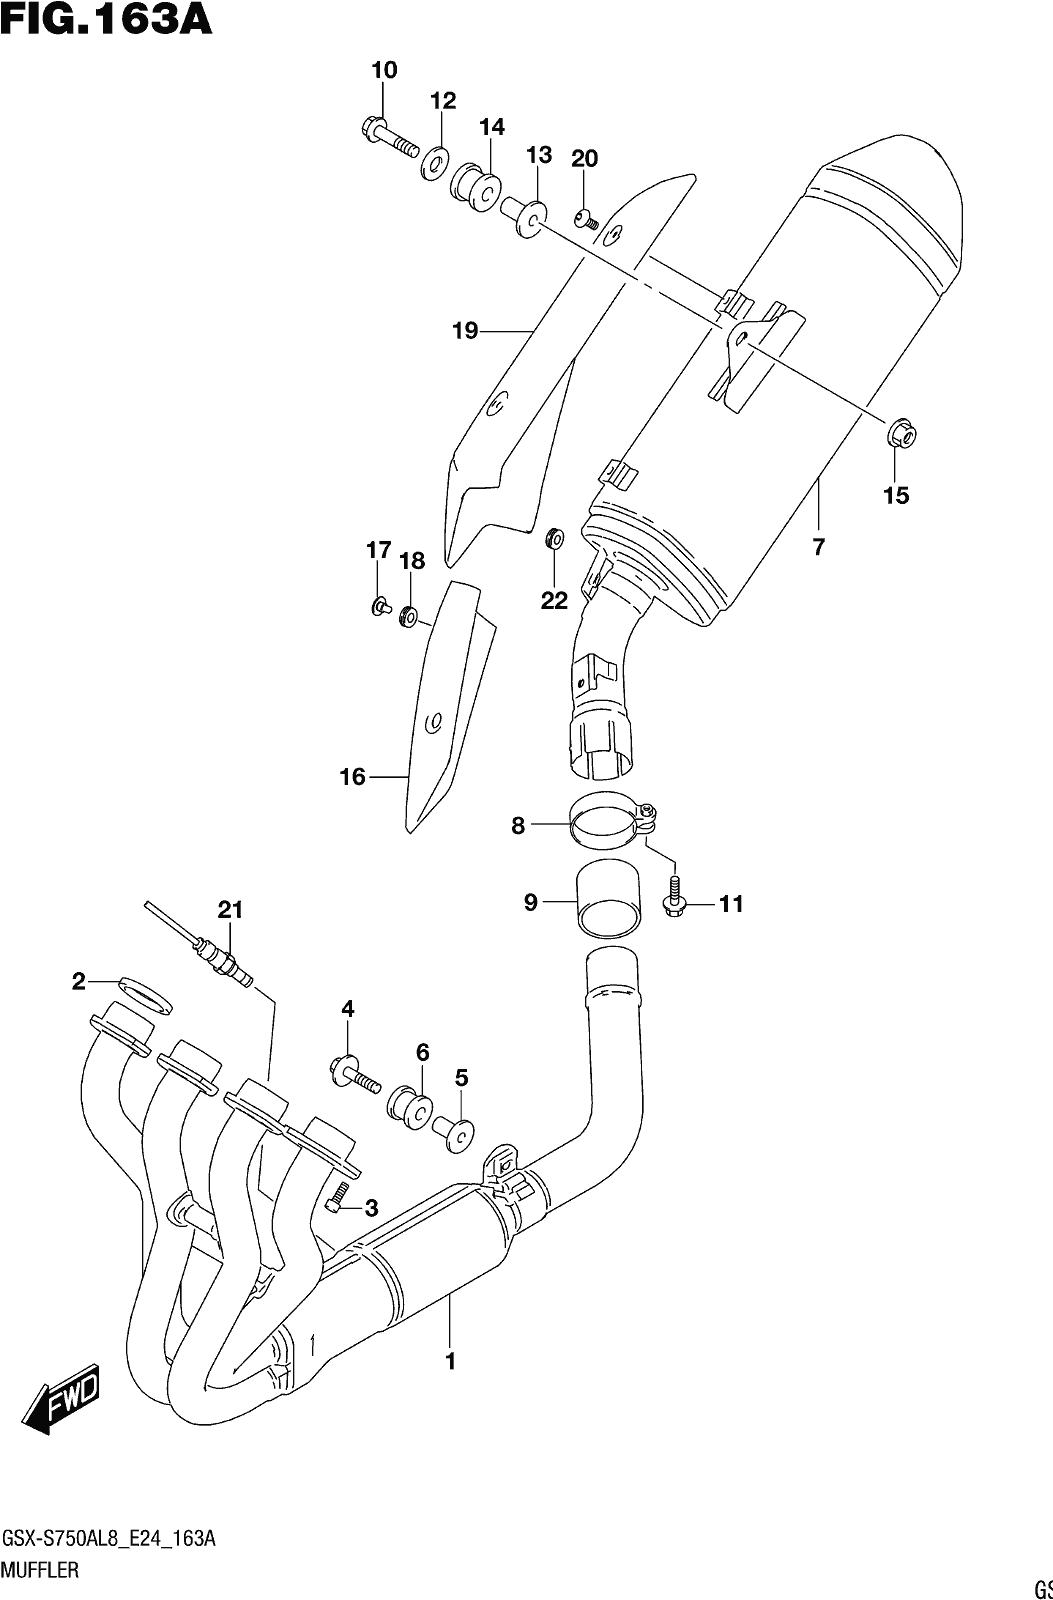 Fig.163a Muffler (gsx-s750al8 E24)